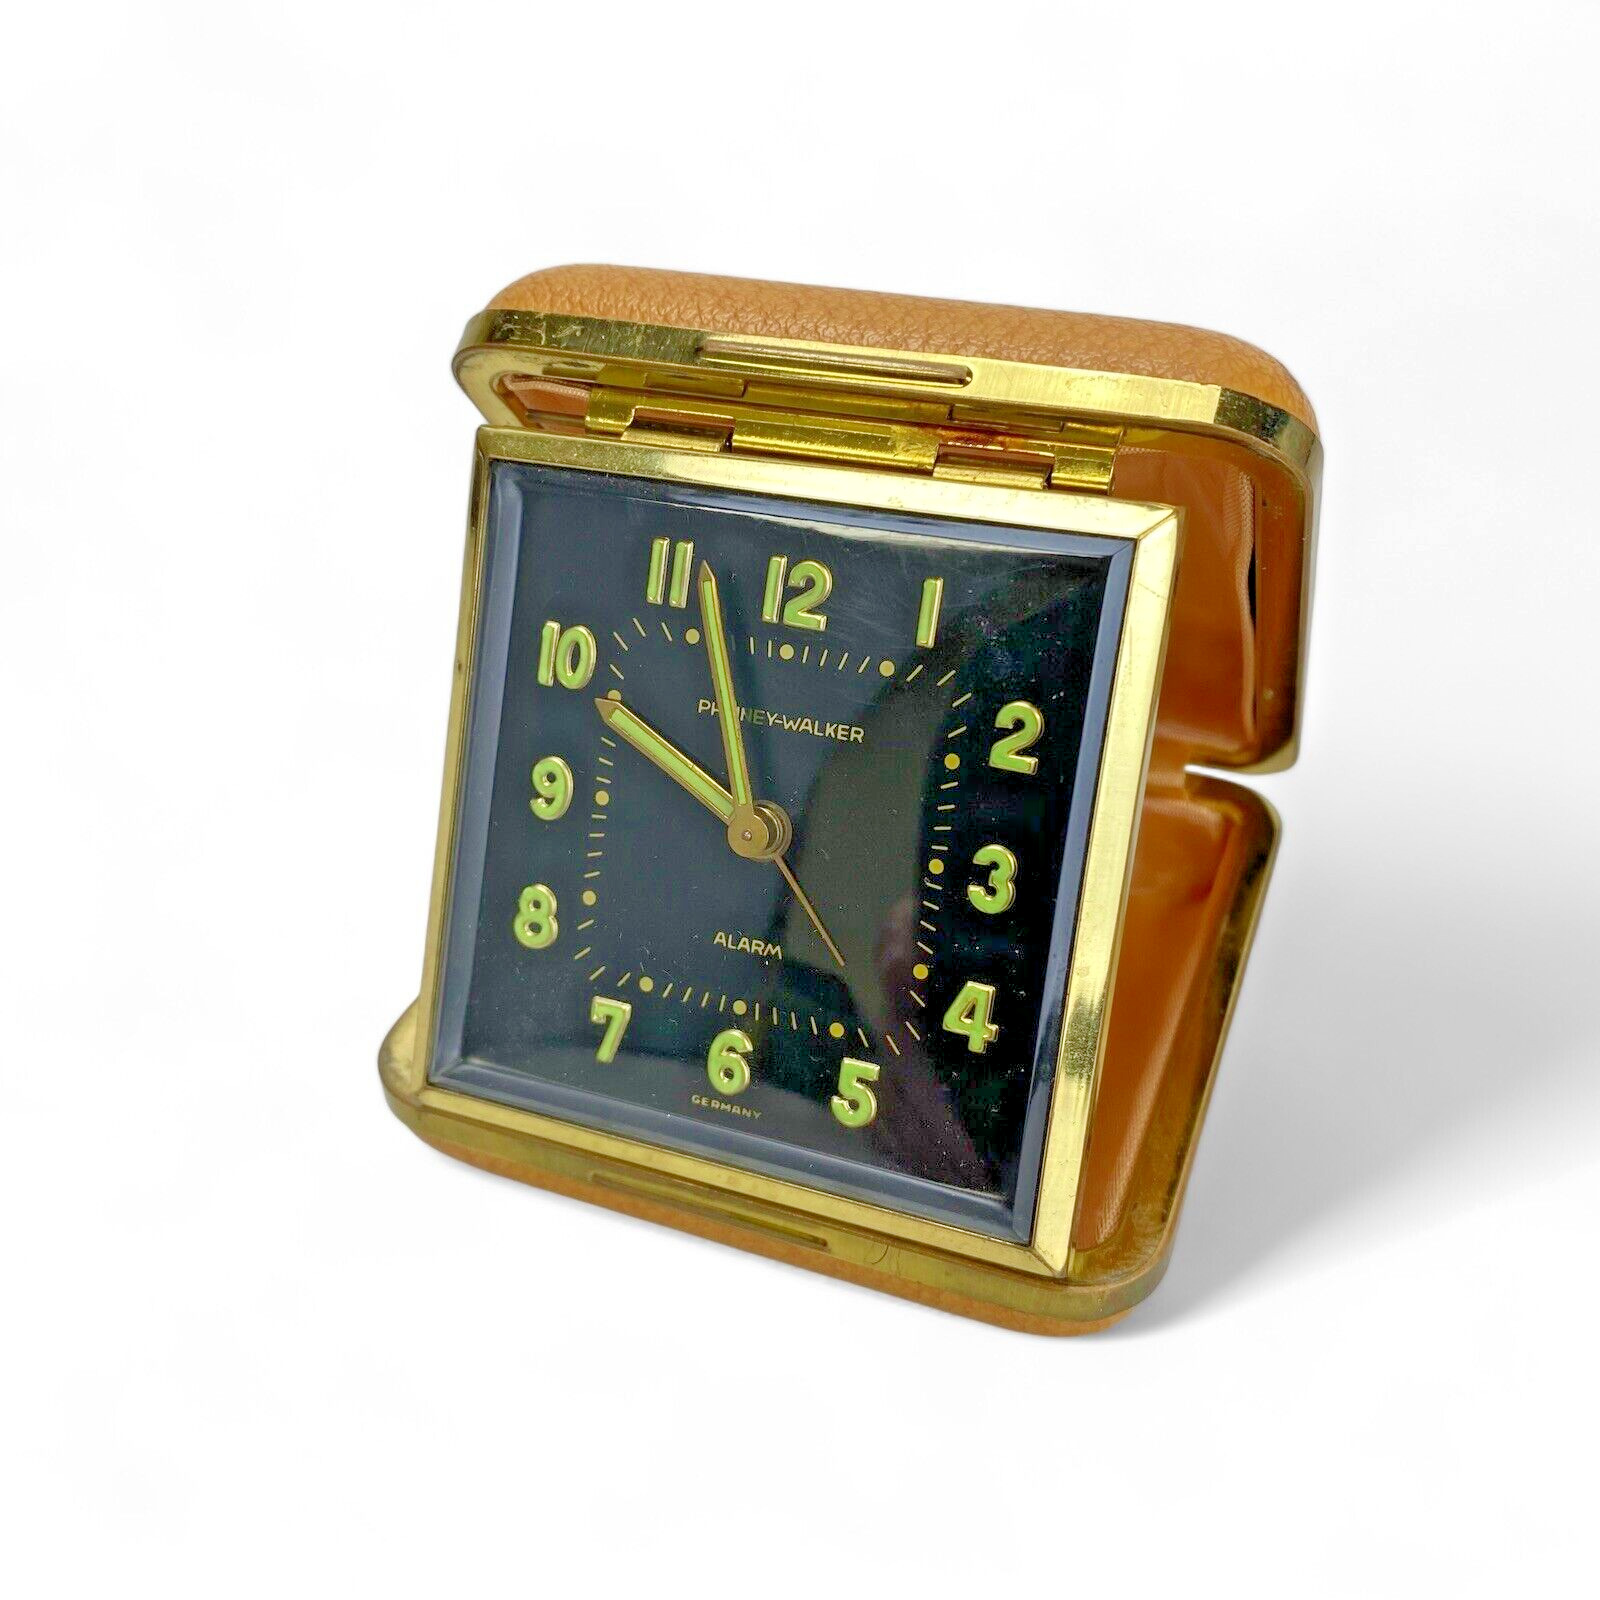 Vintage 1956 Phinney-Walker GLOW Travel Alarm Clock (made in Germany) WORKS